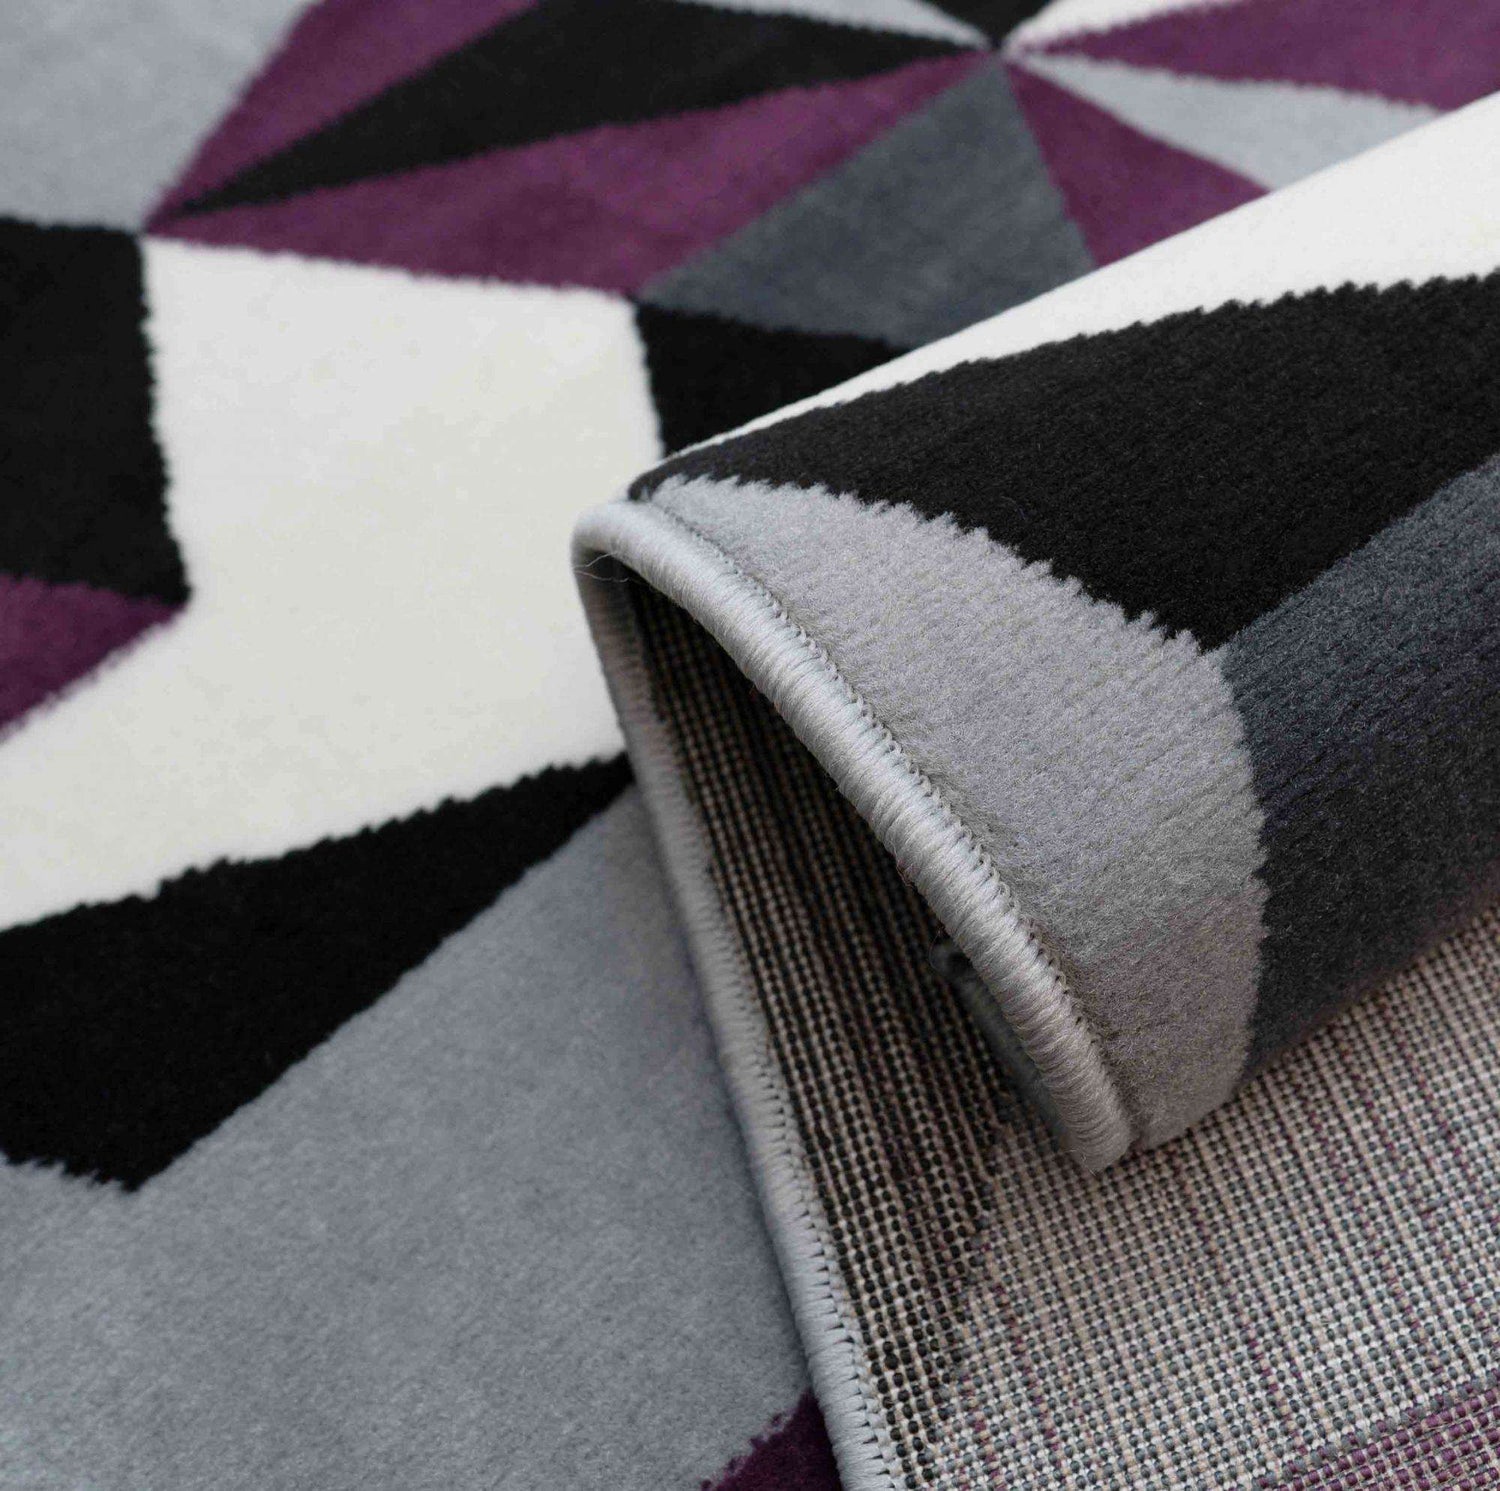 Purple Grey Modern Geometric Hall Runner Rugs